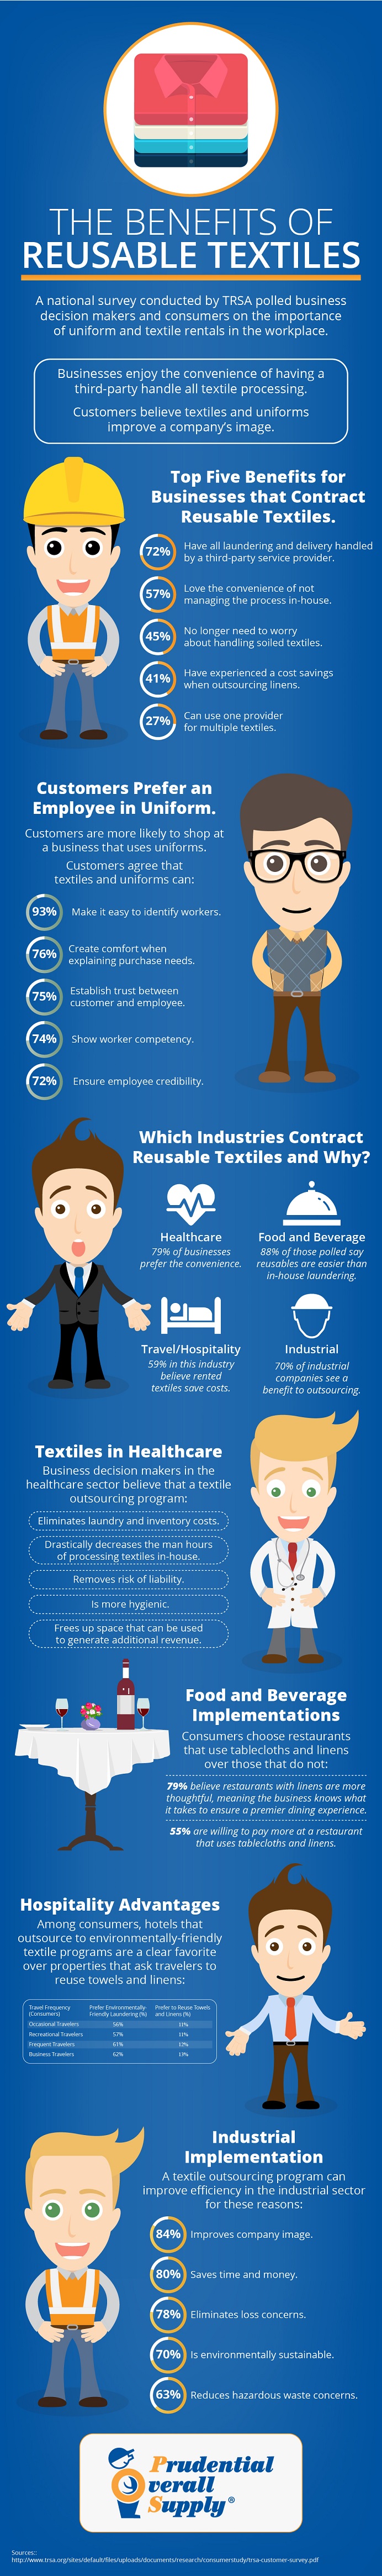 The Benefits of Reusable Textiles